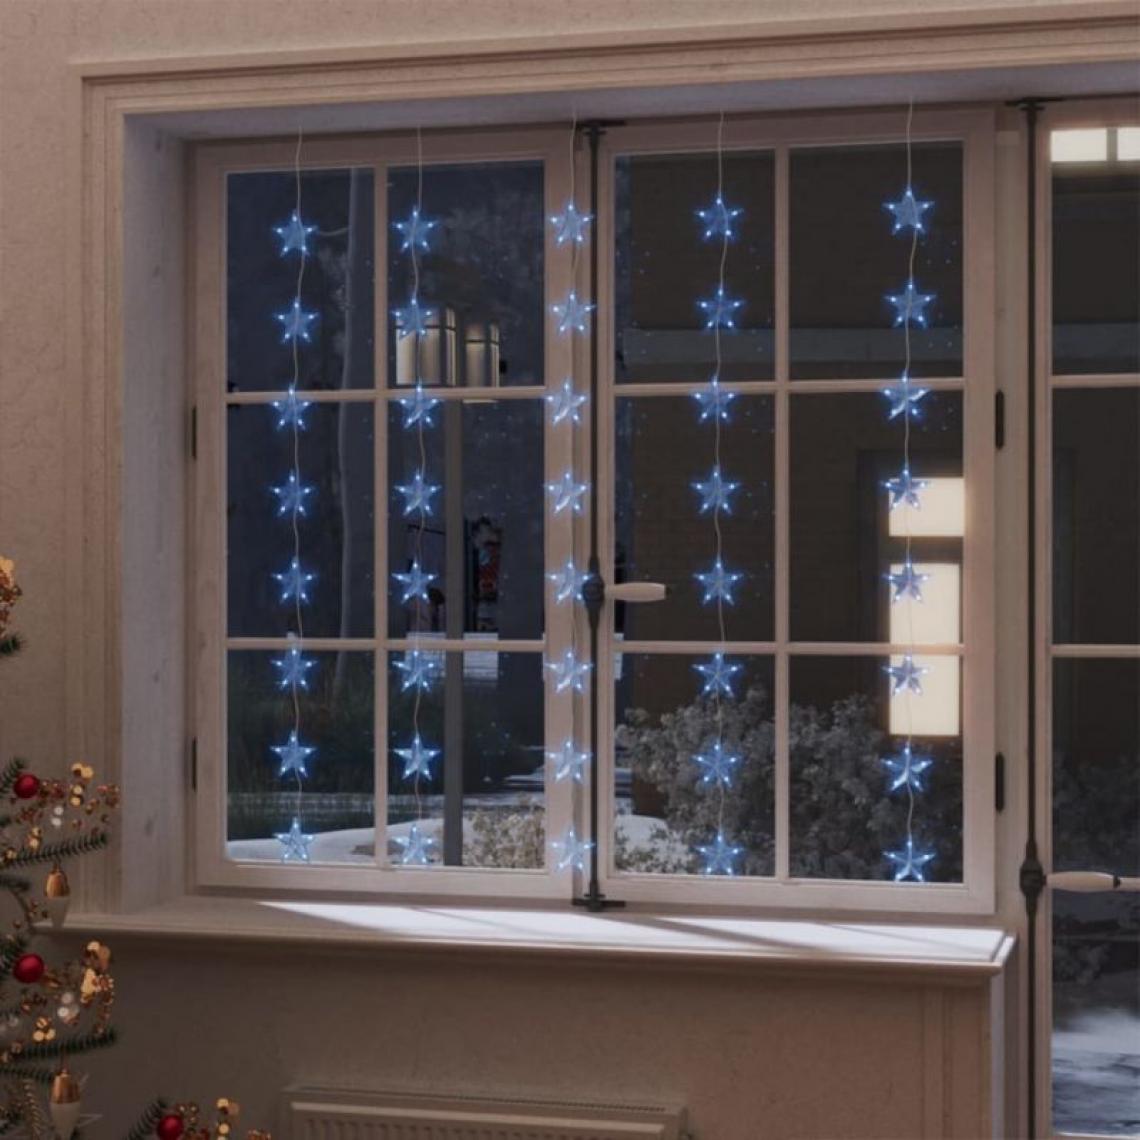 Vidaxl - vidaXL Guirlande lumineuse à étoiles LED 200 LED Bleu 8 fonctions - Décorations de Noël